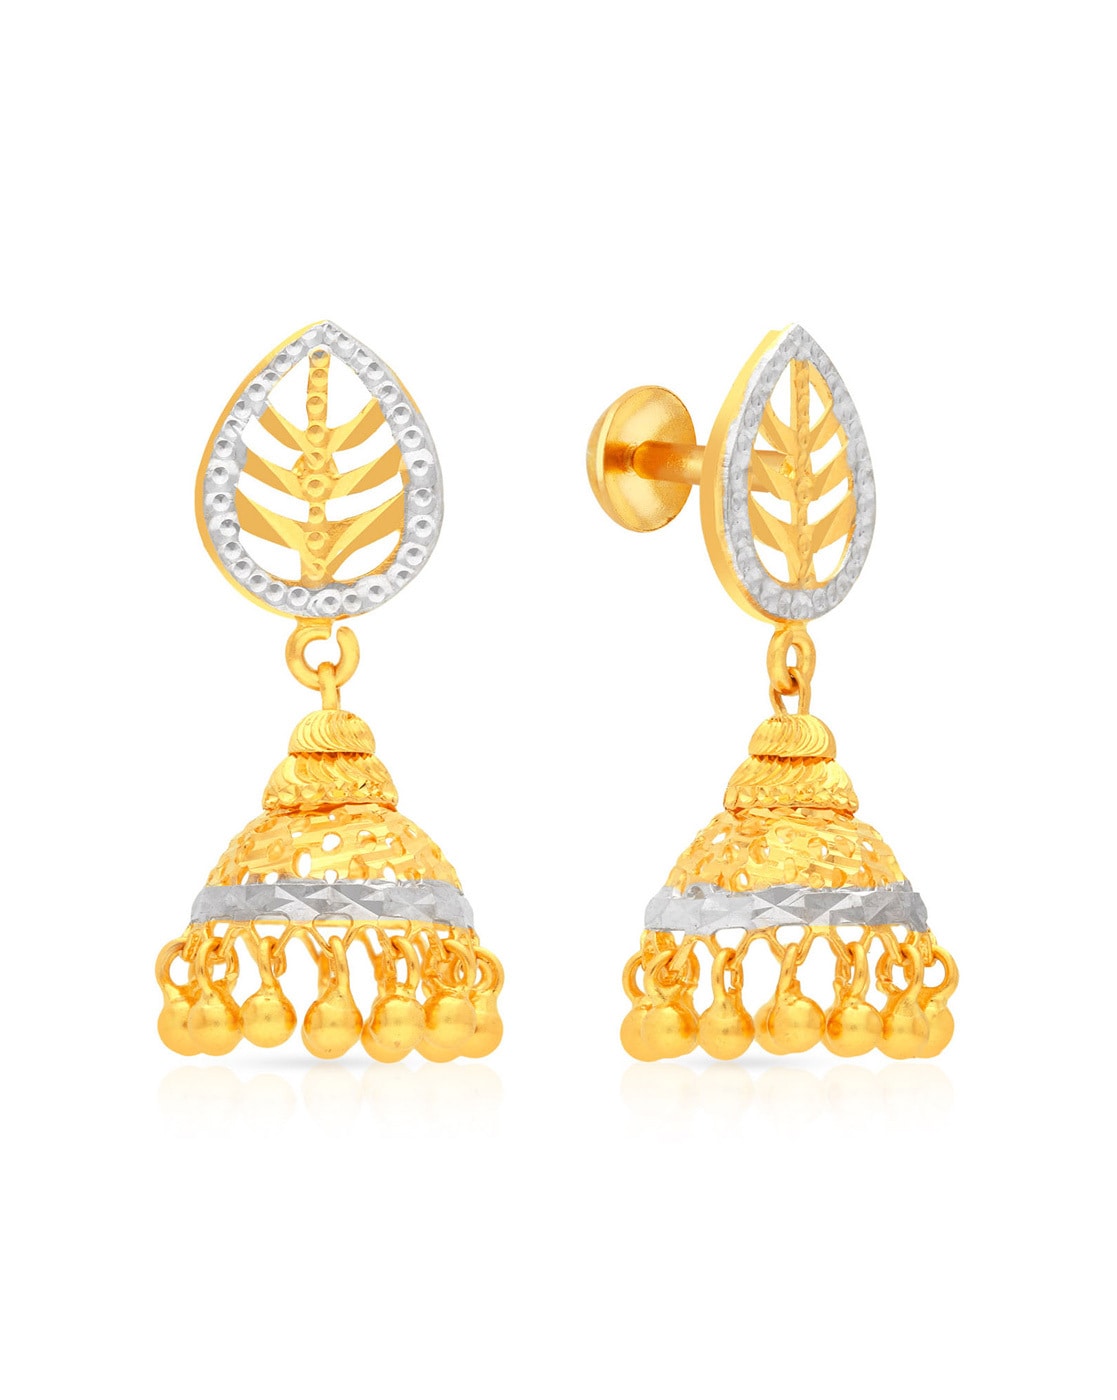 Malabar beautiful gold earring designs 🙏 - YouTube